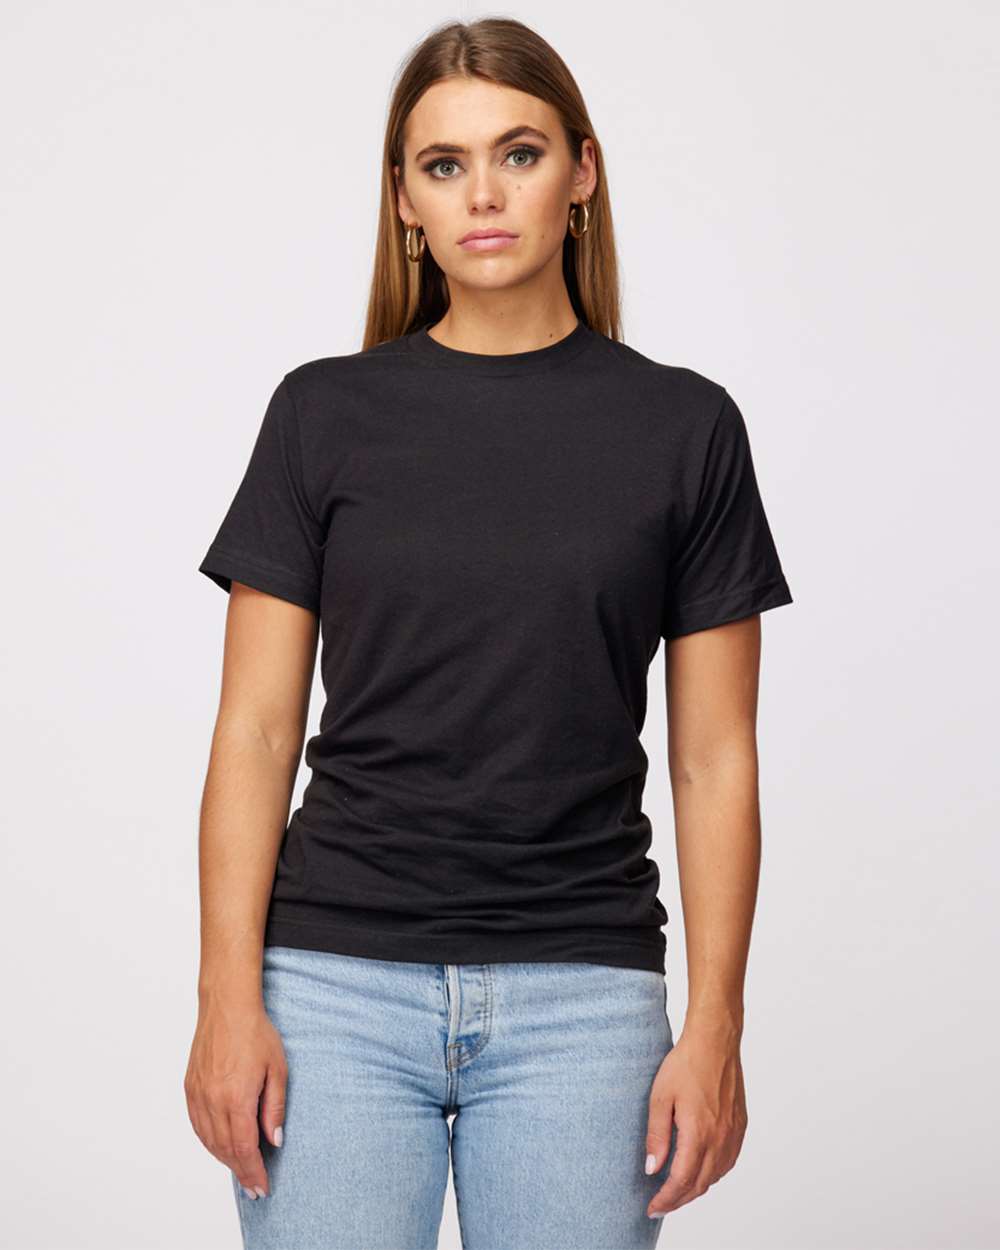 Tultex 202 - Unisex Fine Jersey T-Shirt